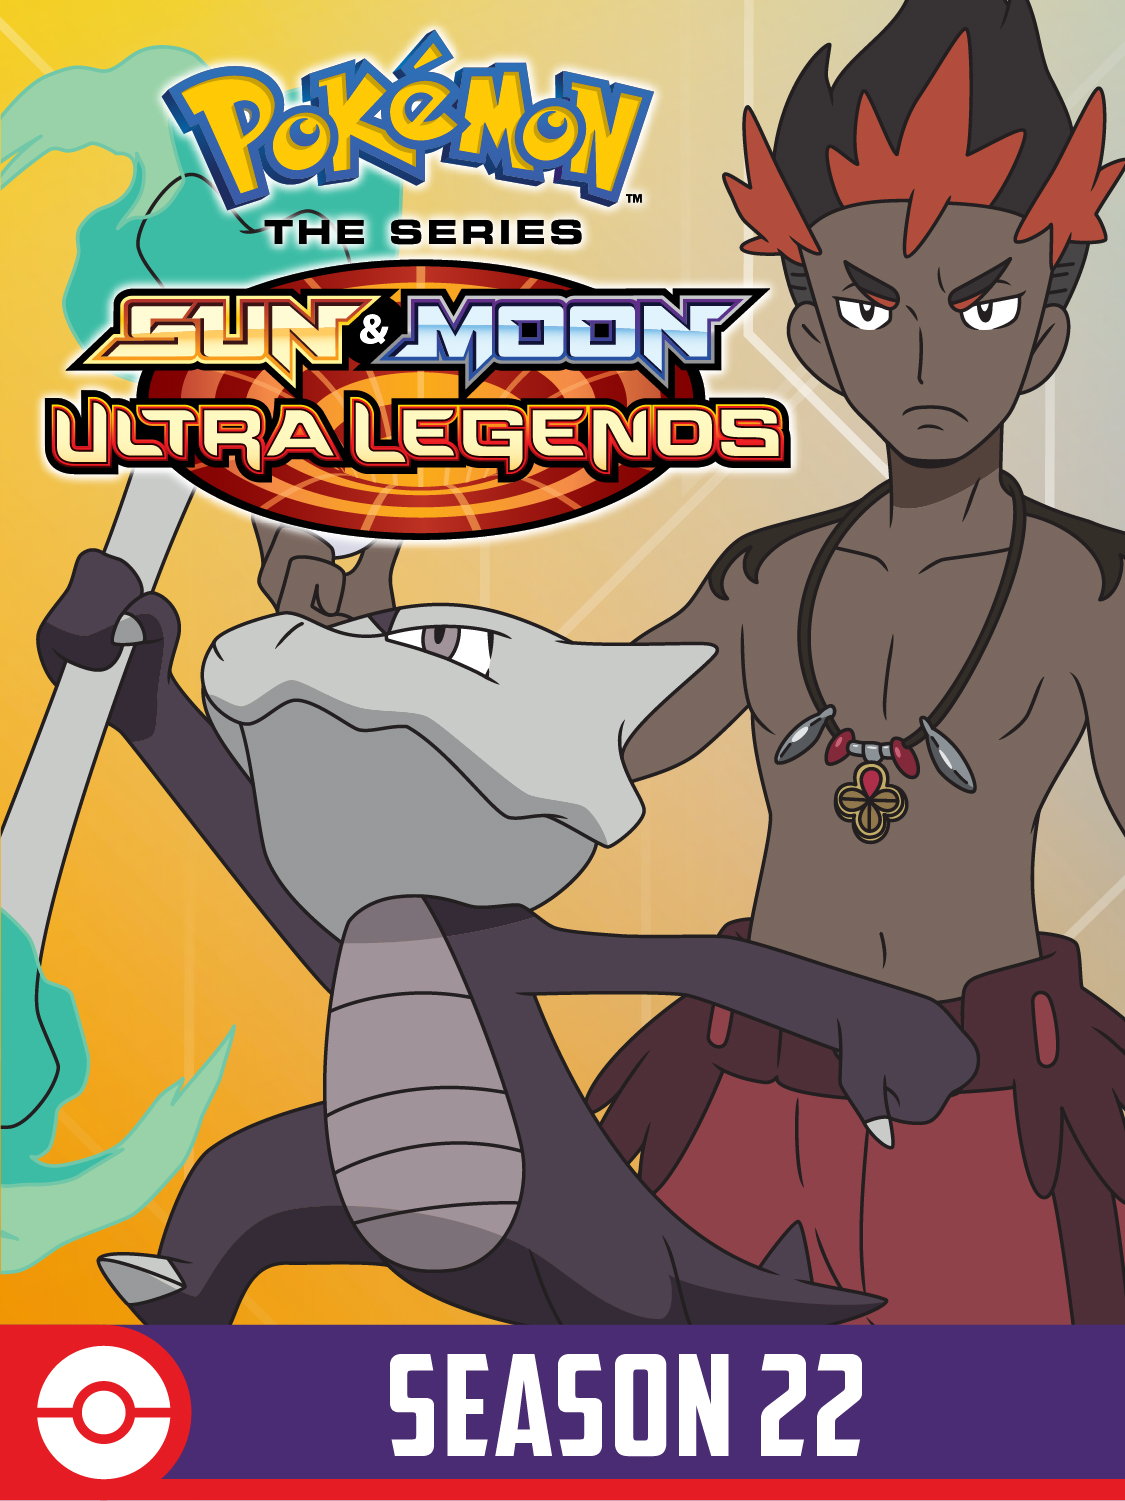 Pokémon the Series: Sun & Moon, TV Anime series